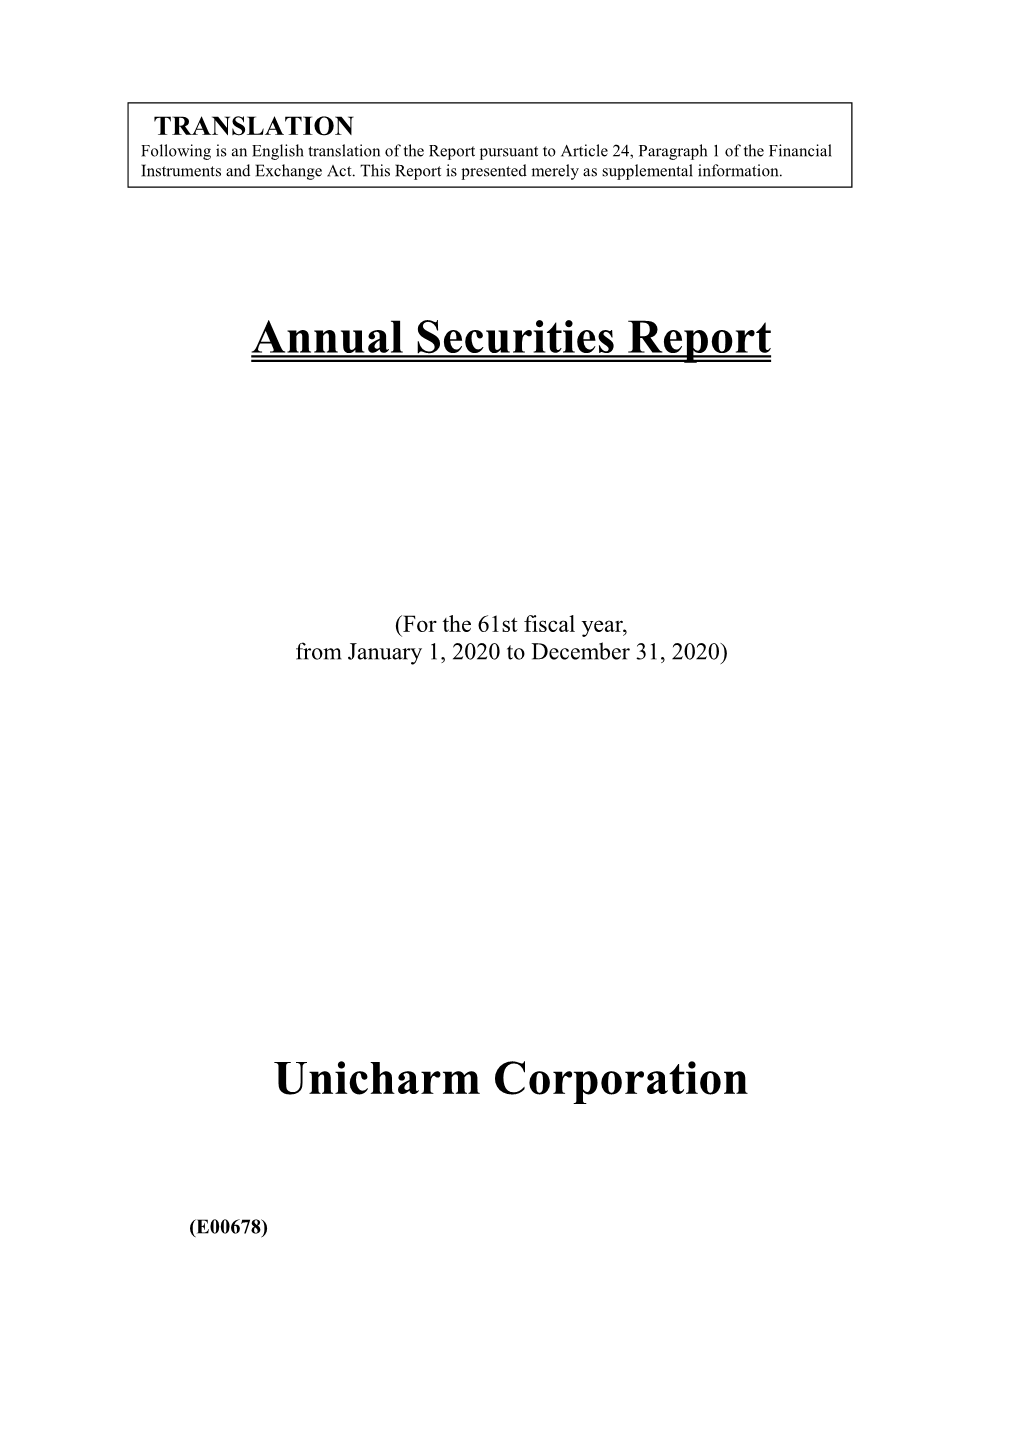 Annual Securities Report Unicharm Corporation